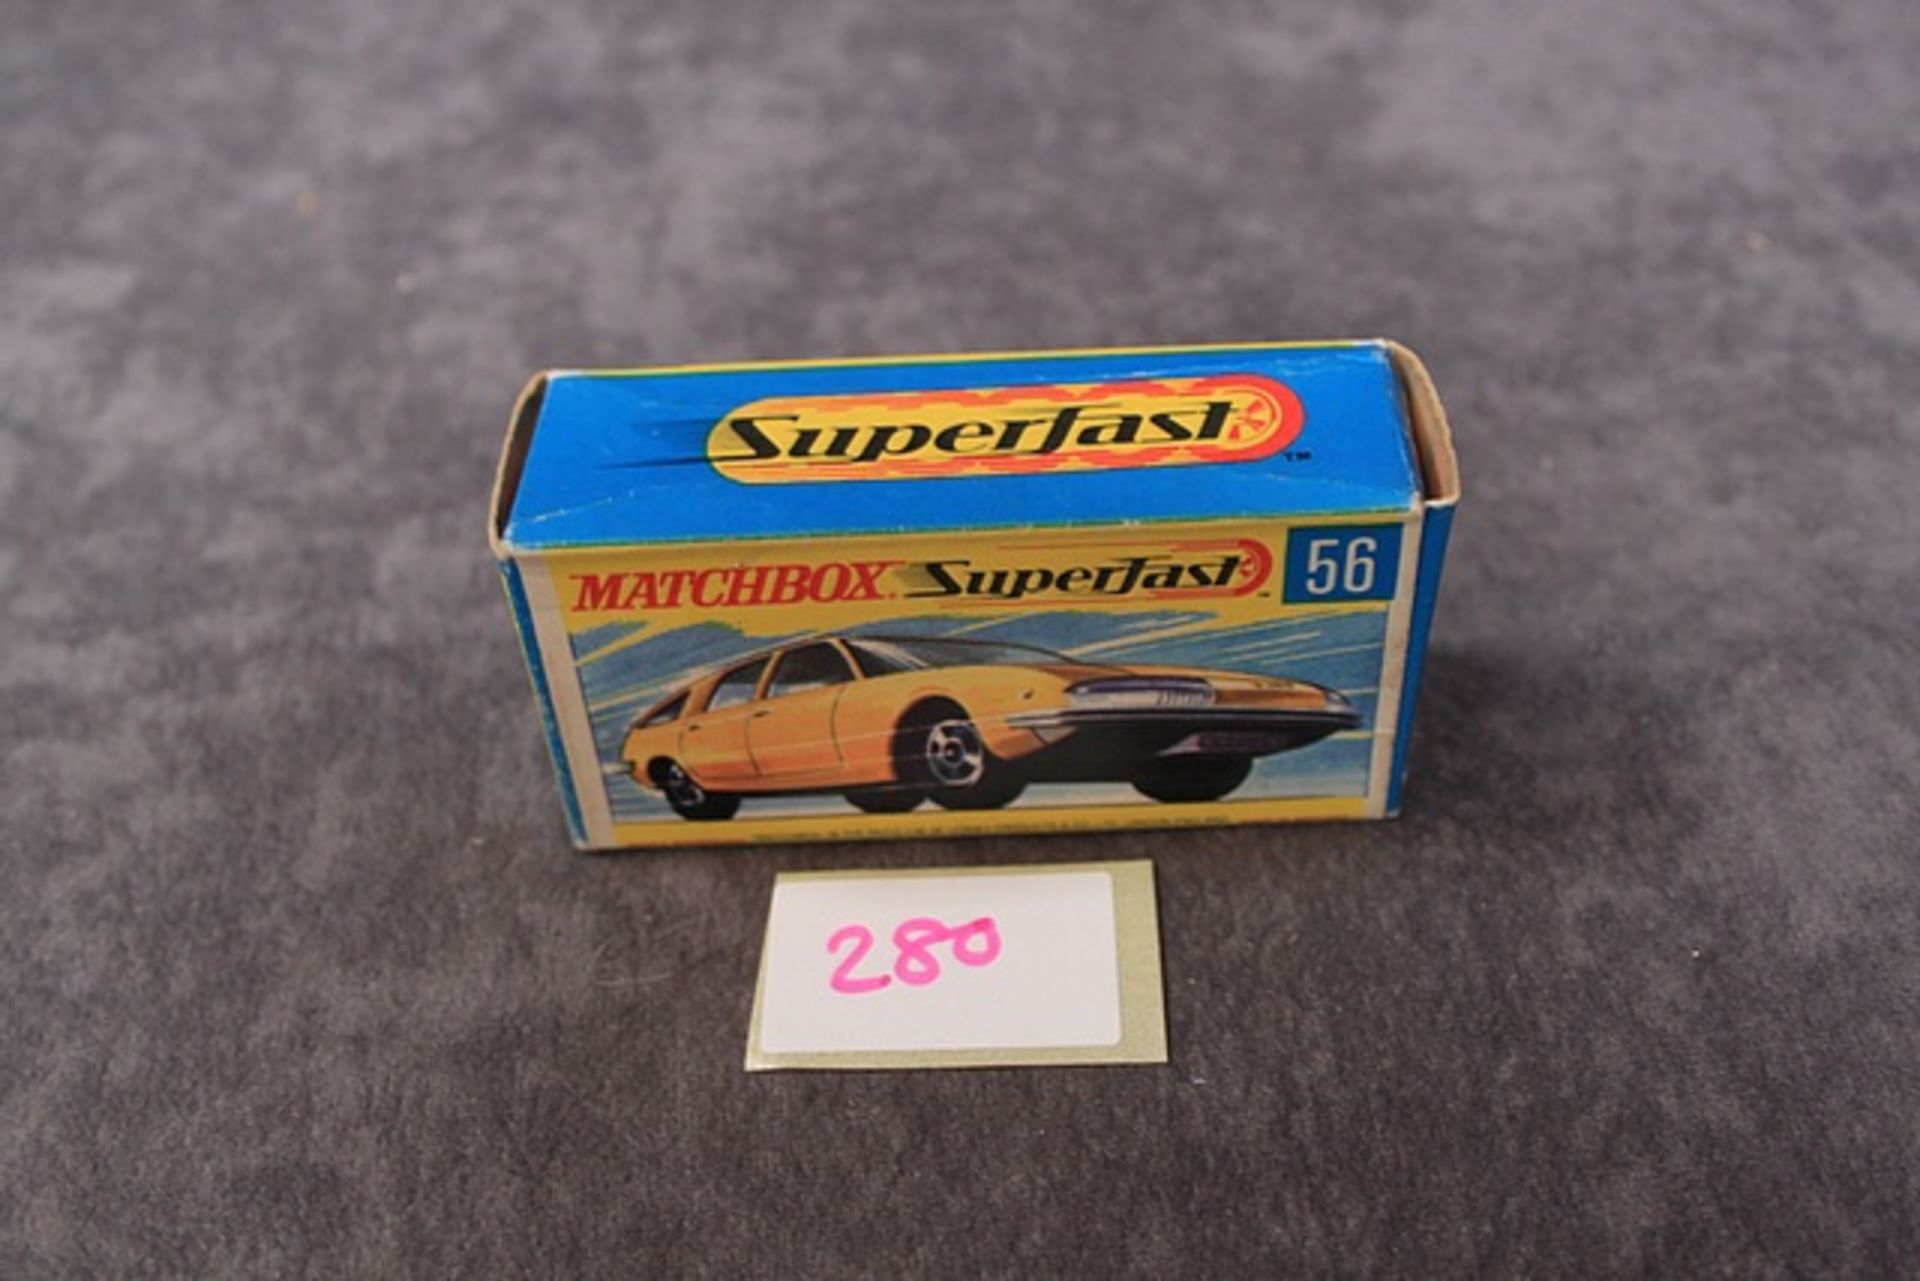 Mint Matchbox Superfast Diecast # 56 BMC 1800 Pinnfarina In Metallic Gold In Excellent Box - Image 3 of 3